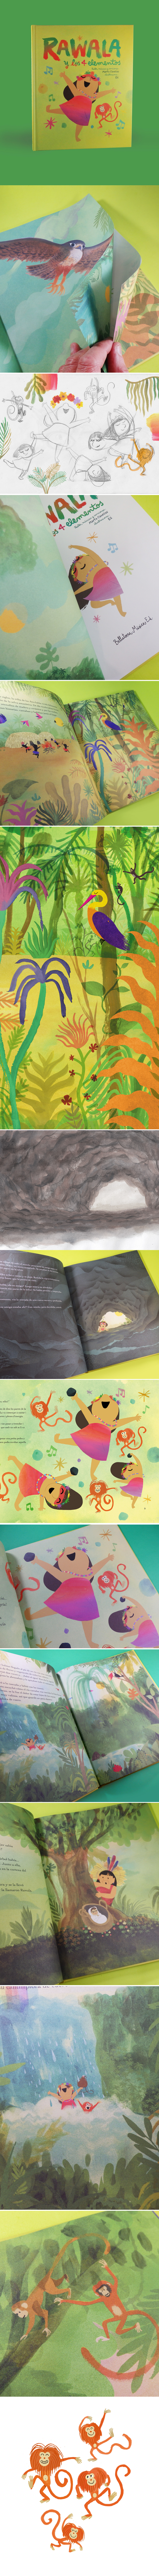 Libro Infantil ilustracion Character design  children's book amazonia Deforestation Nature naturaleza